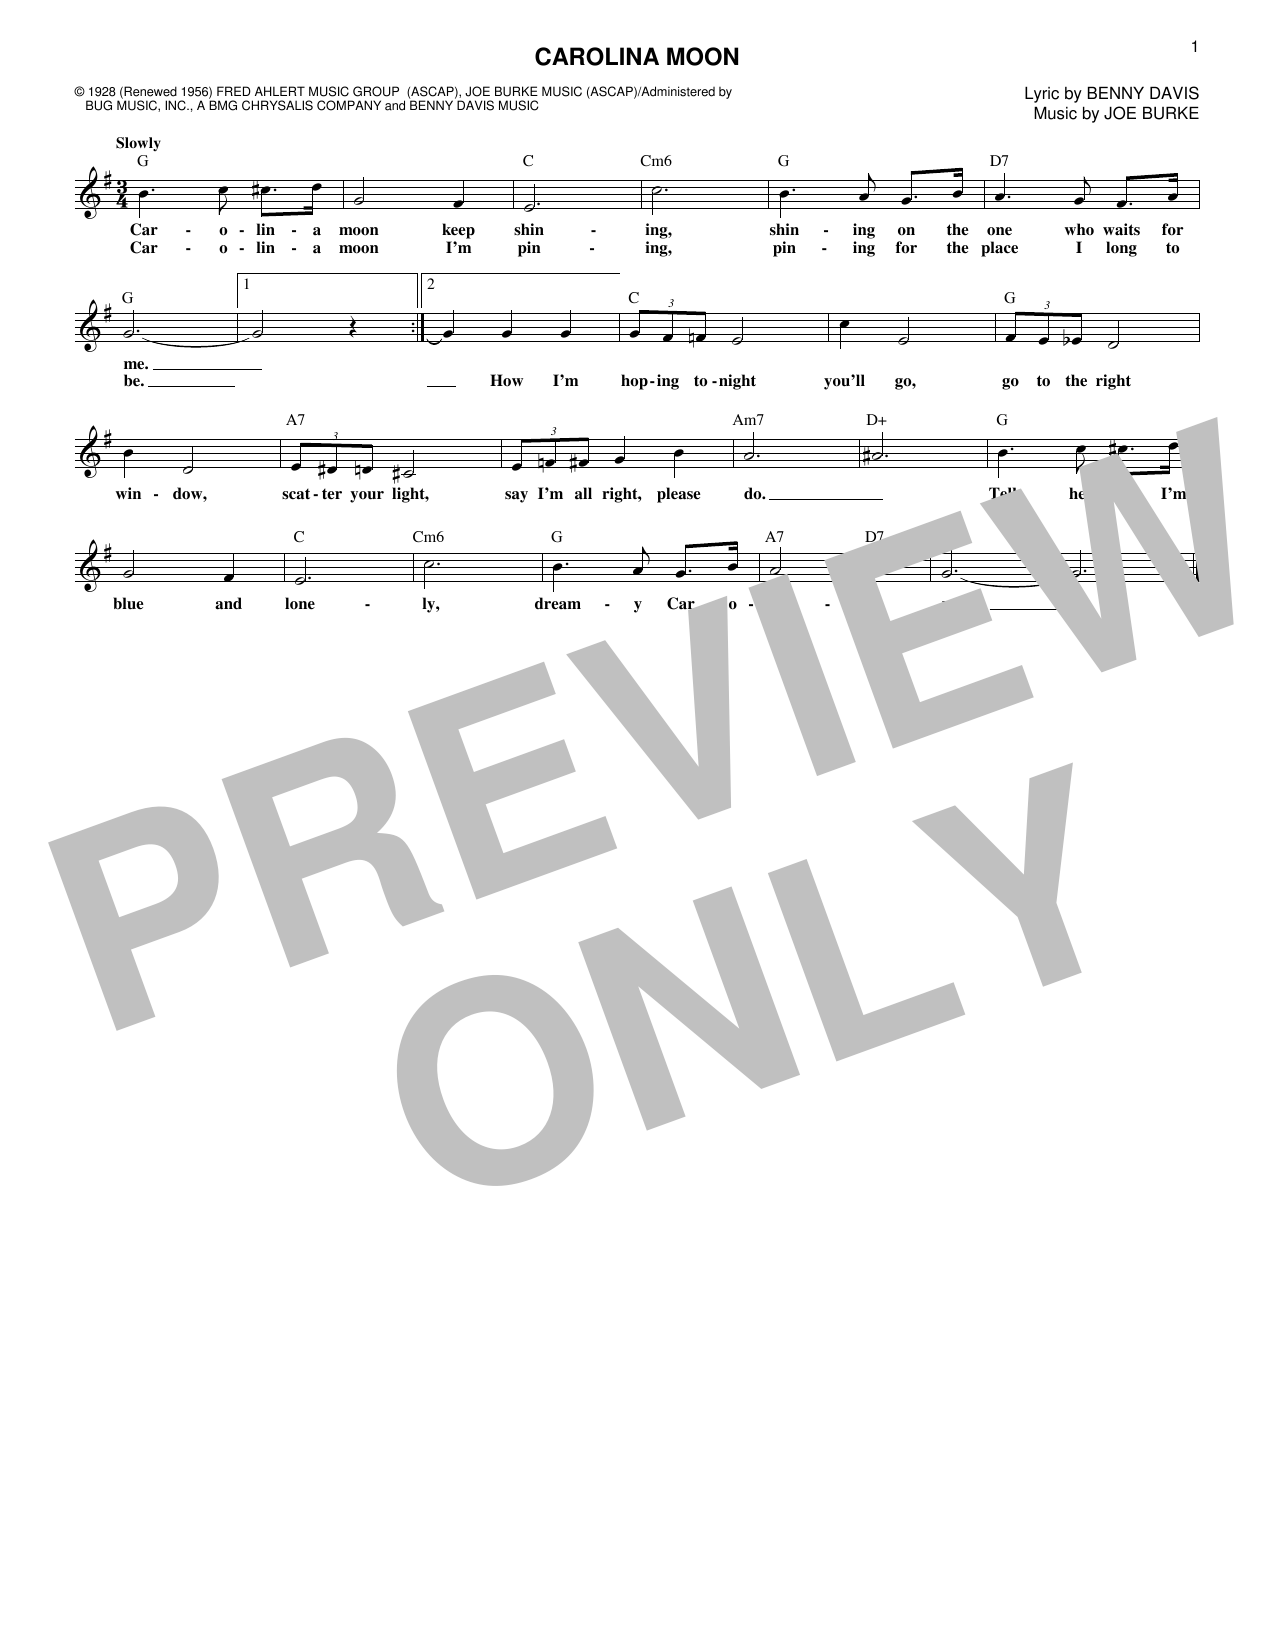 Download Joe Burke Carolina Moon Sheet Music and learn how to play Melody Line, Lyrics & Chords PDF digital score in minutes